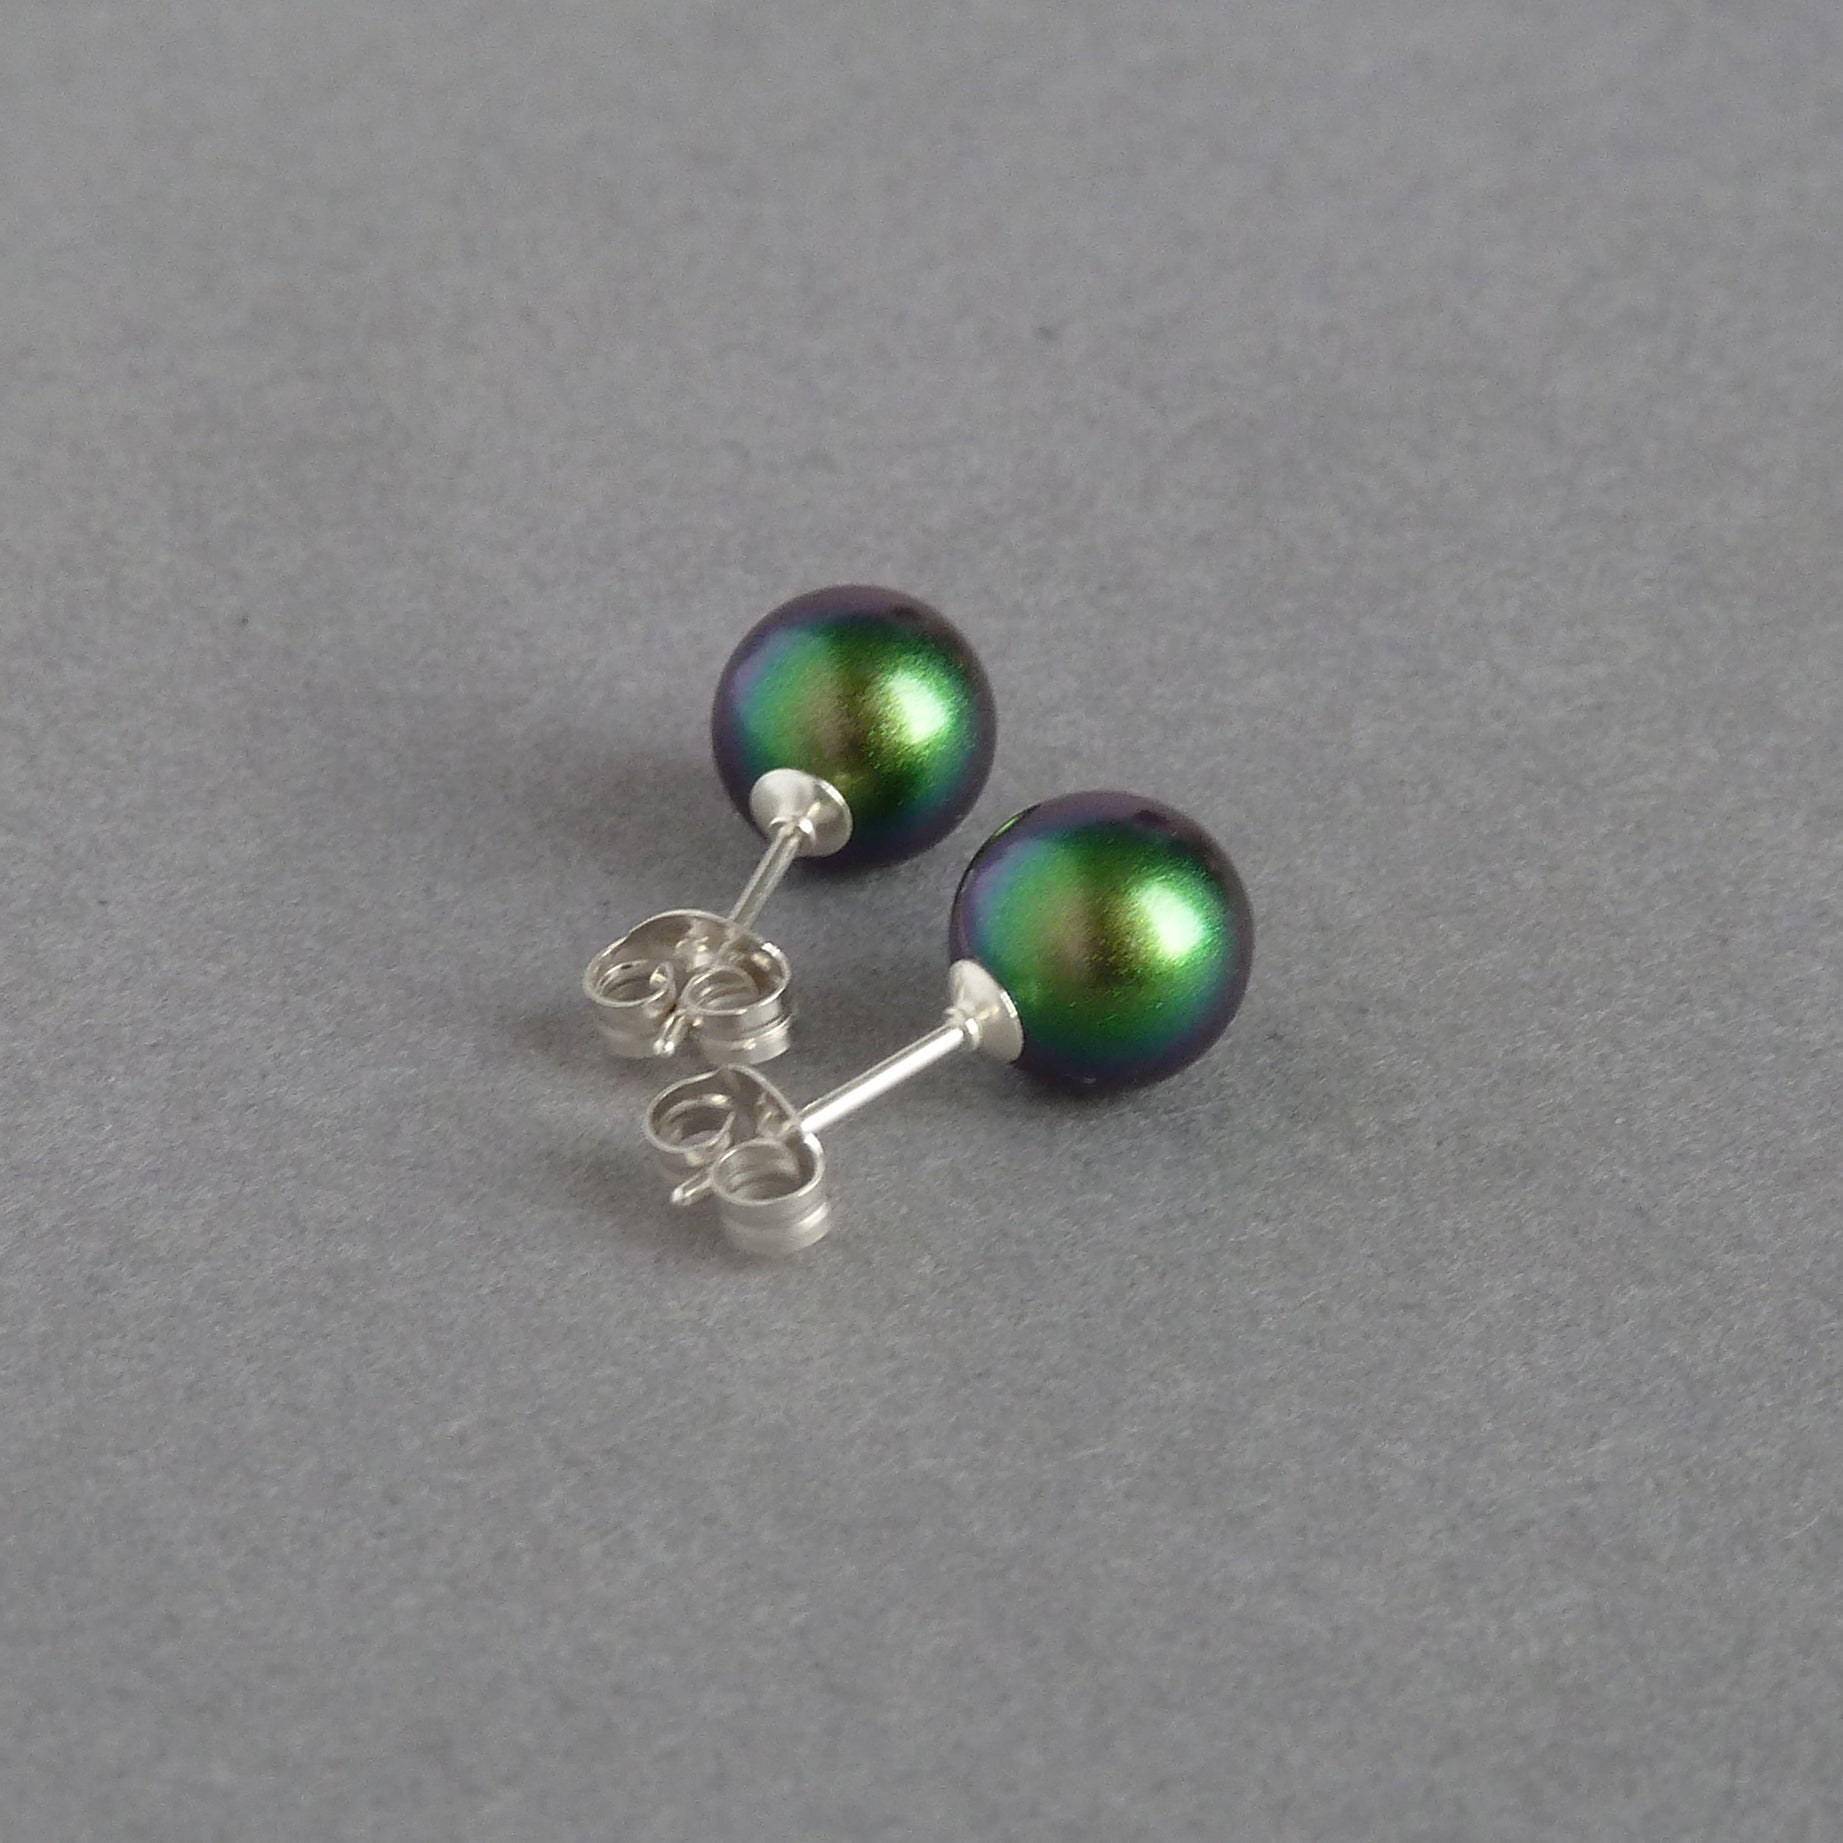 8mm green pearl stud earrings